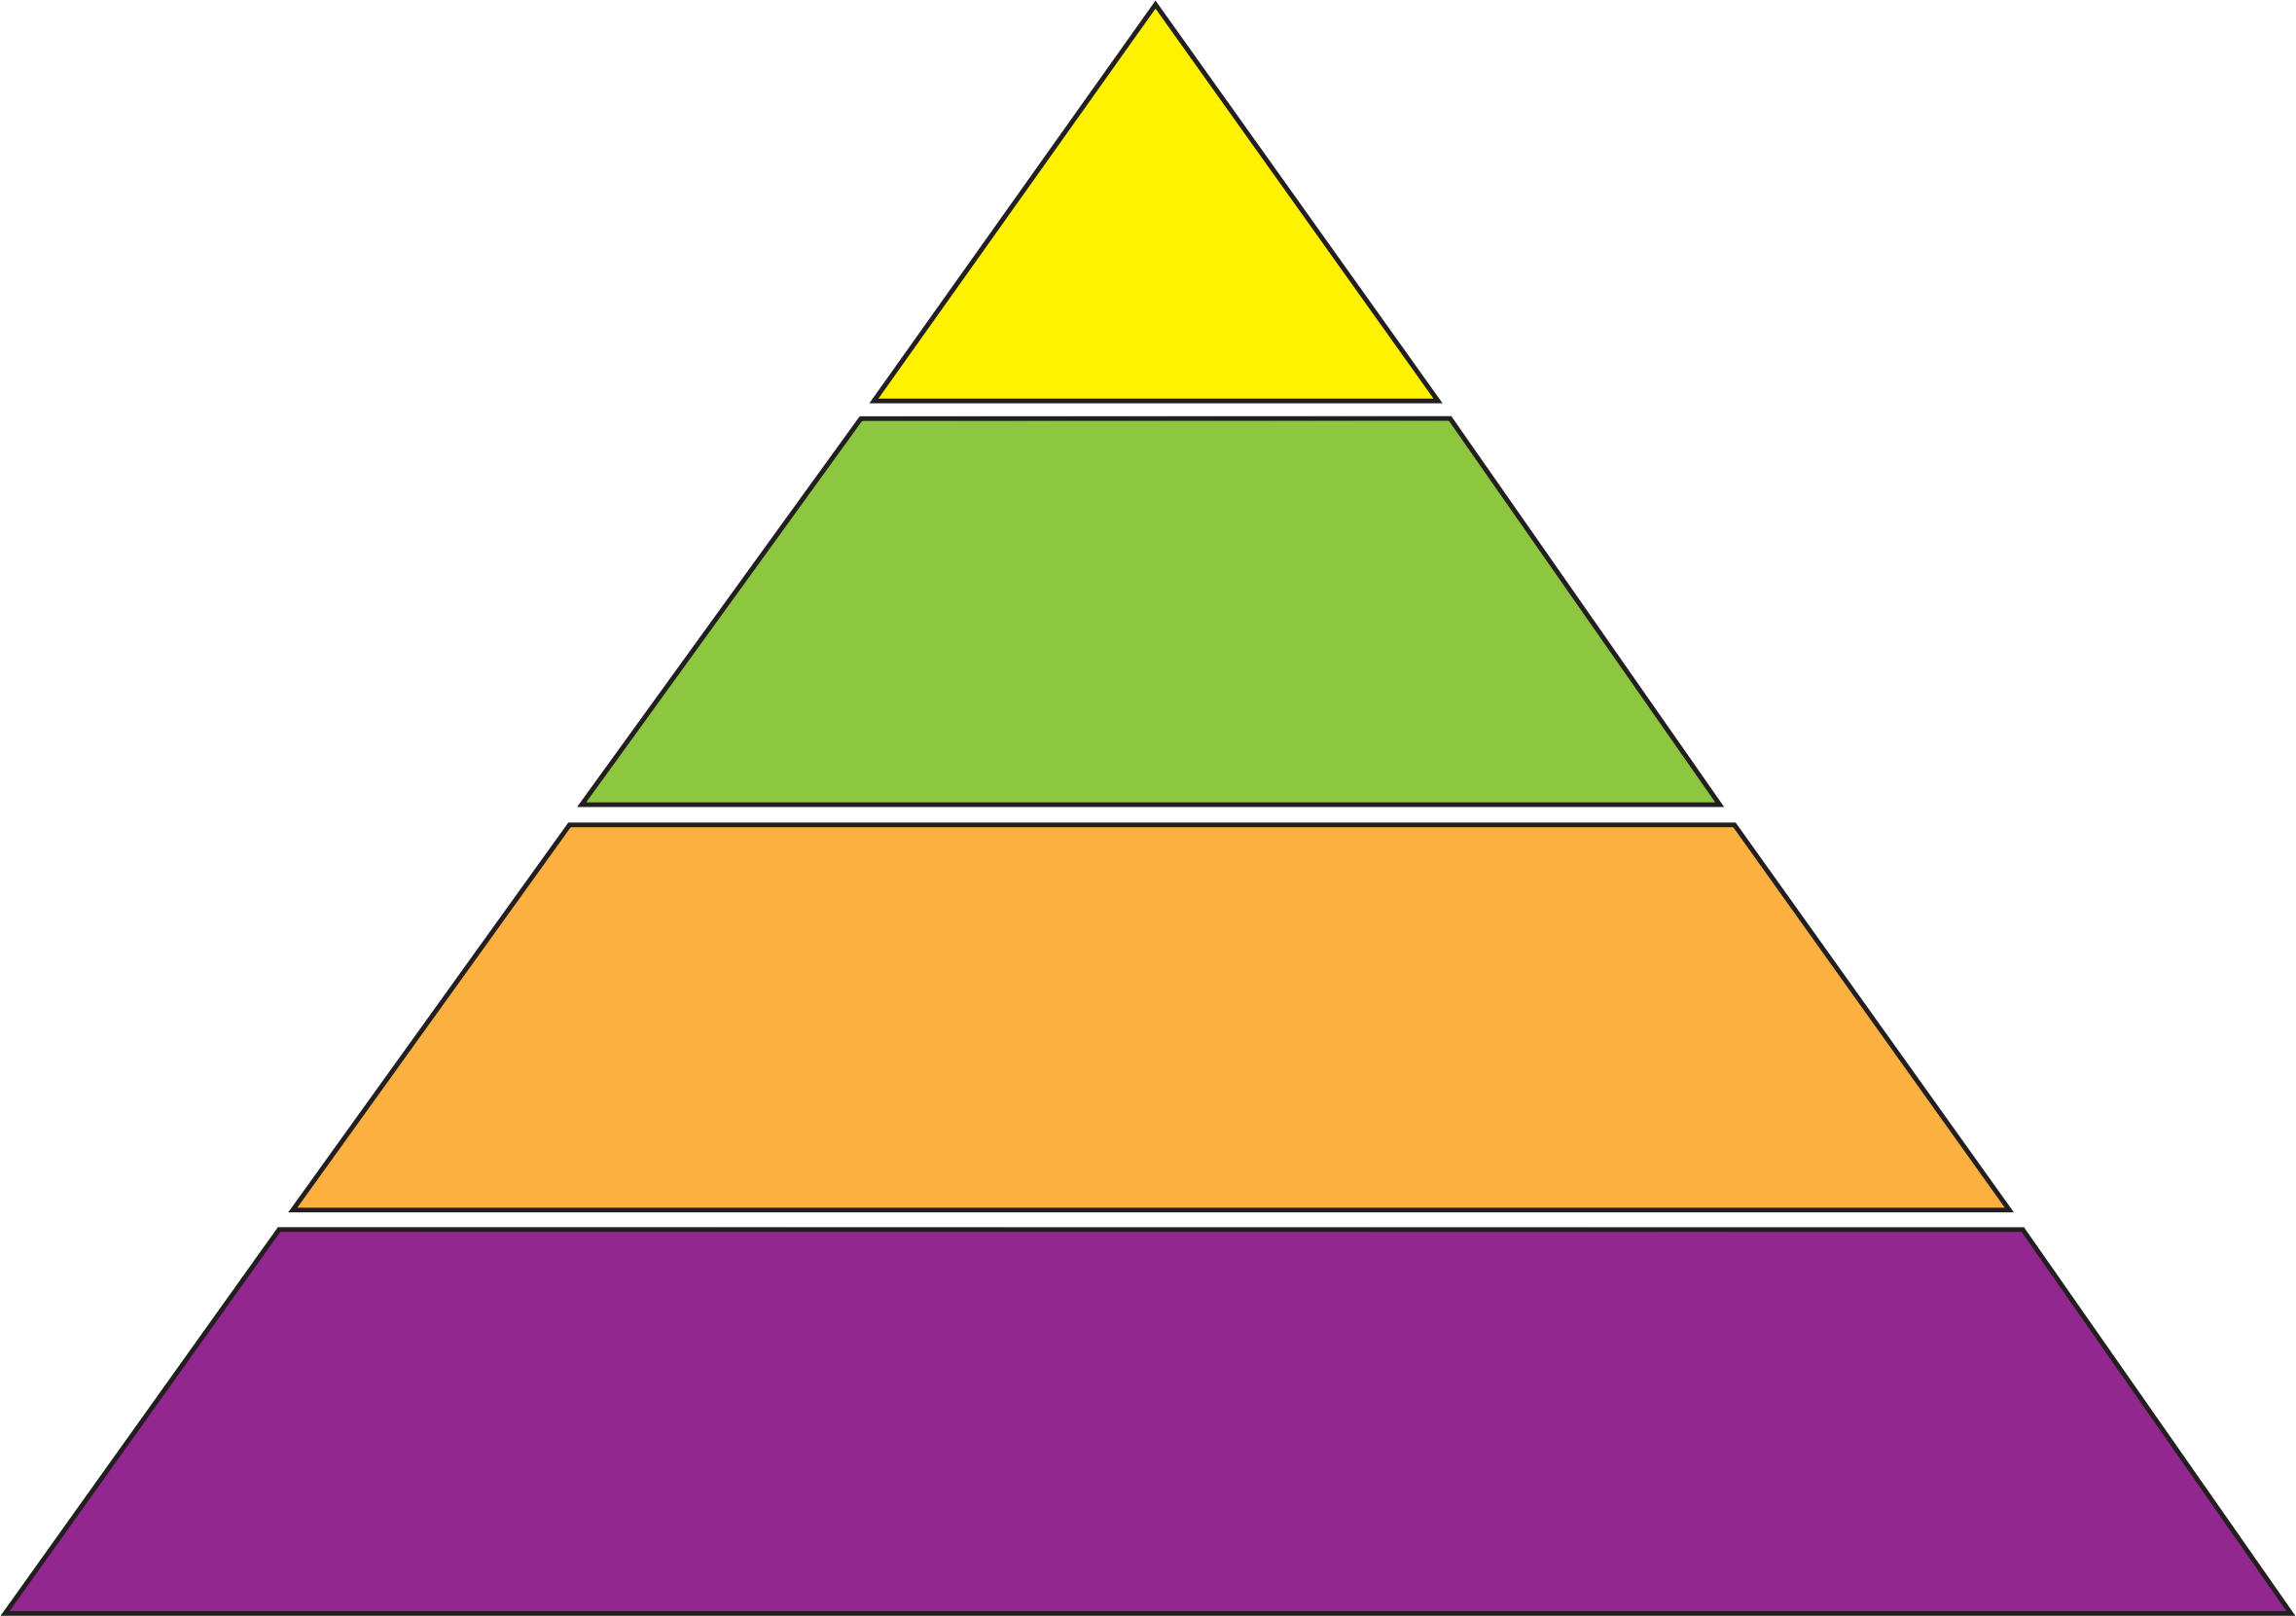 Food Chain Pyramid Template